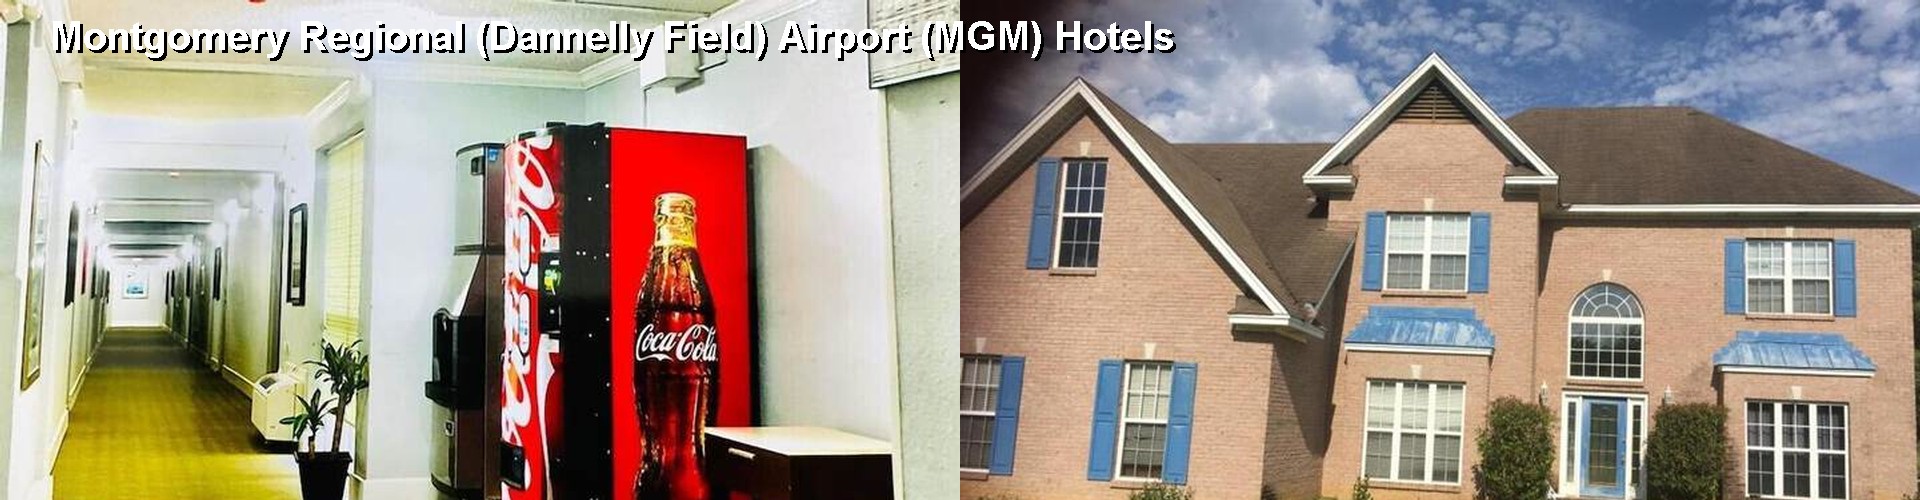 5 Best Hotels near Montgomery Regional (Dannelly Field) Airport (MGM)